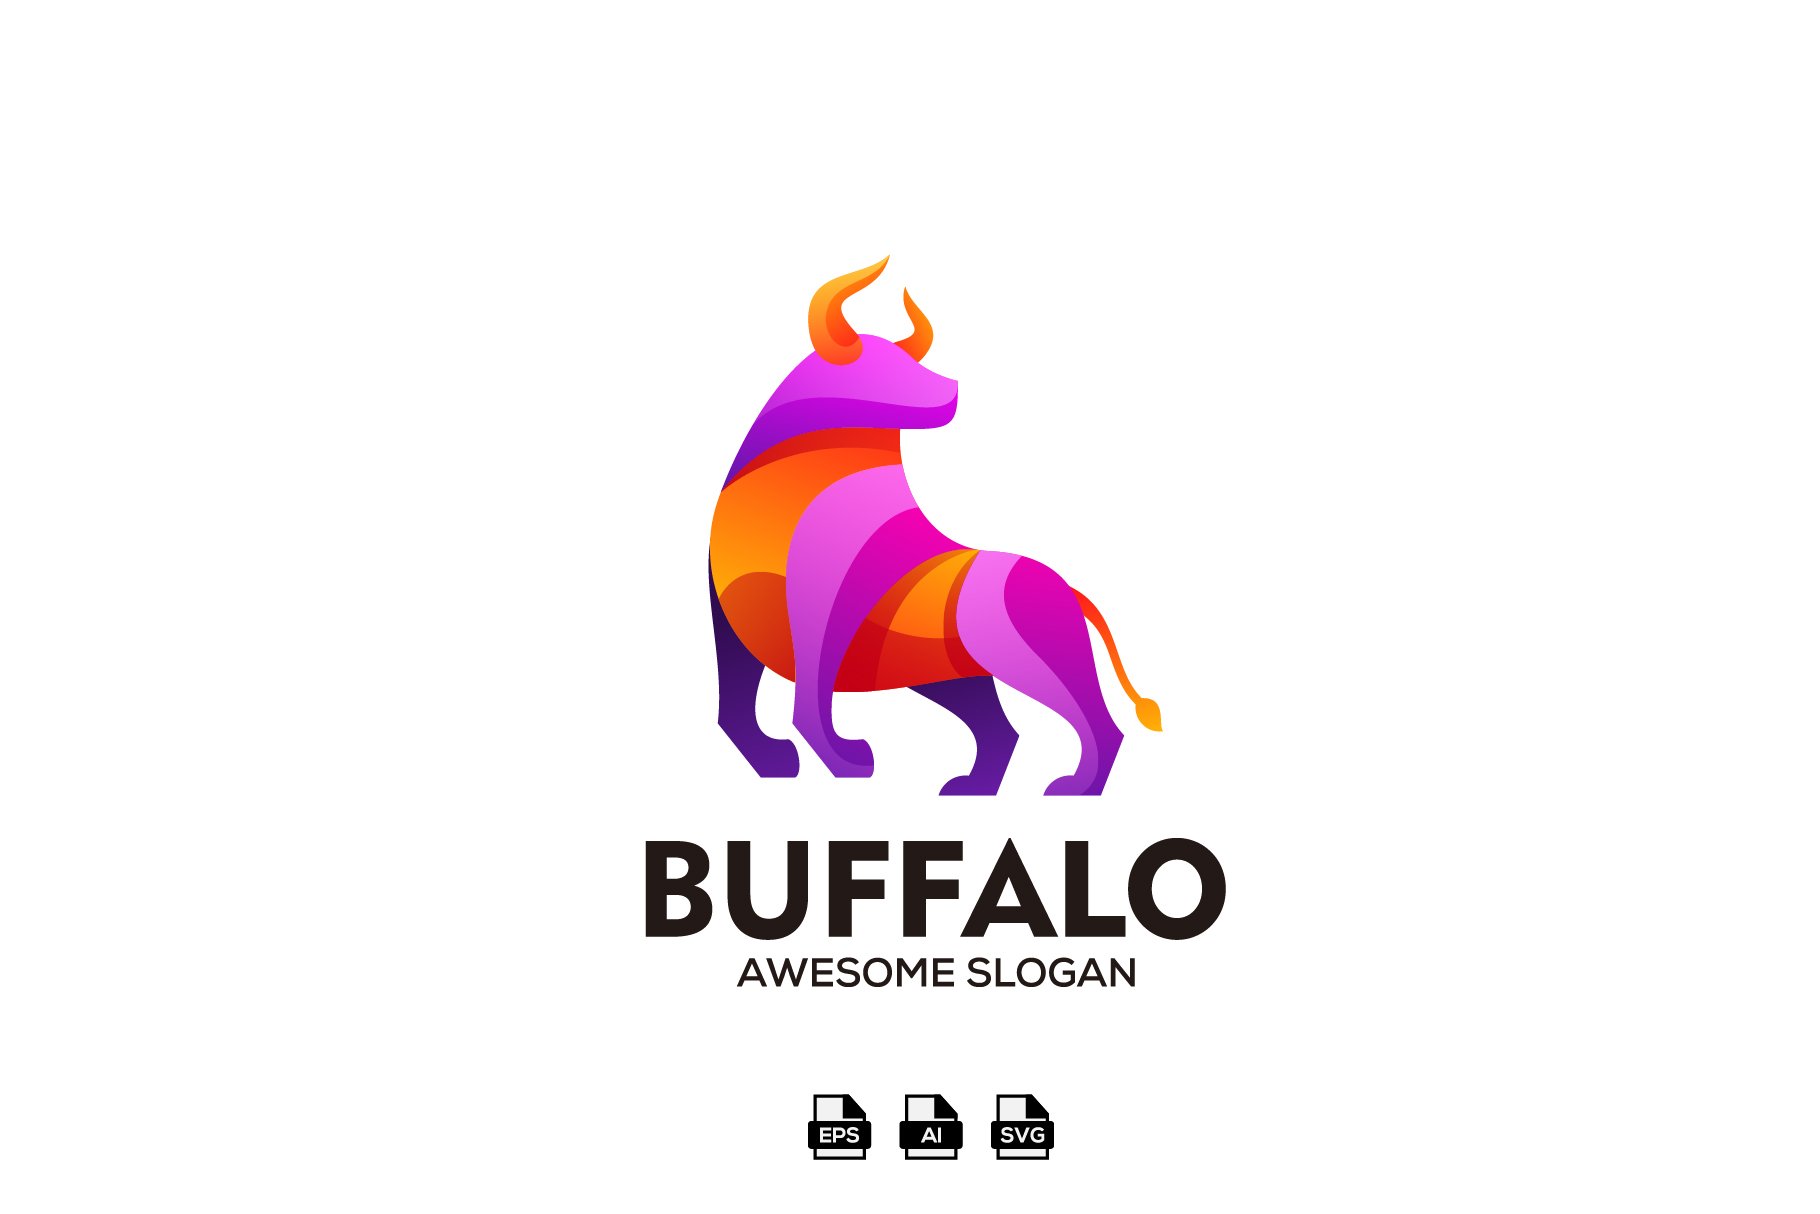 elegant buffalo logo vector cover image.